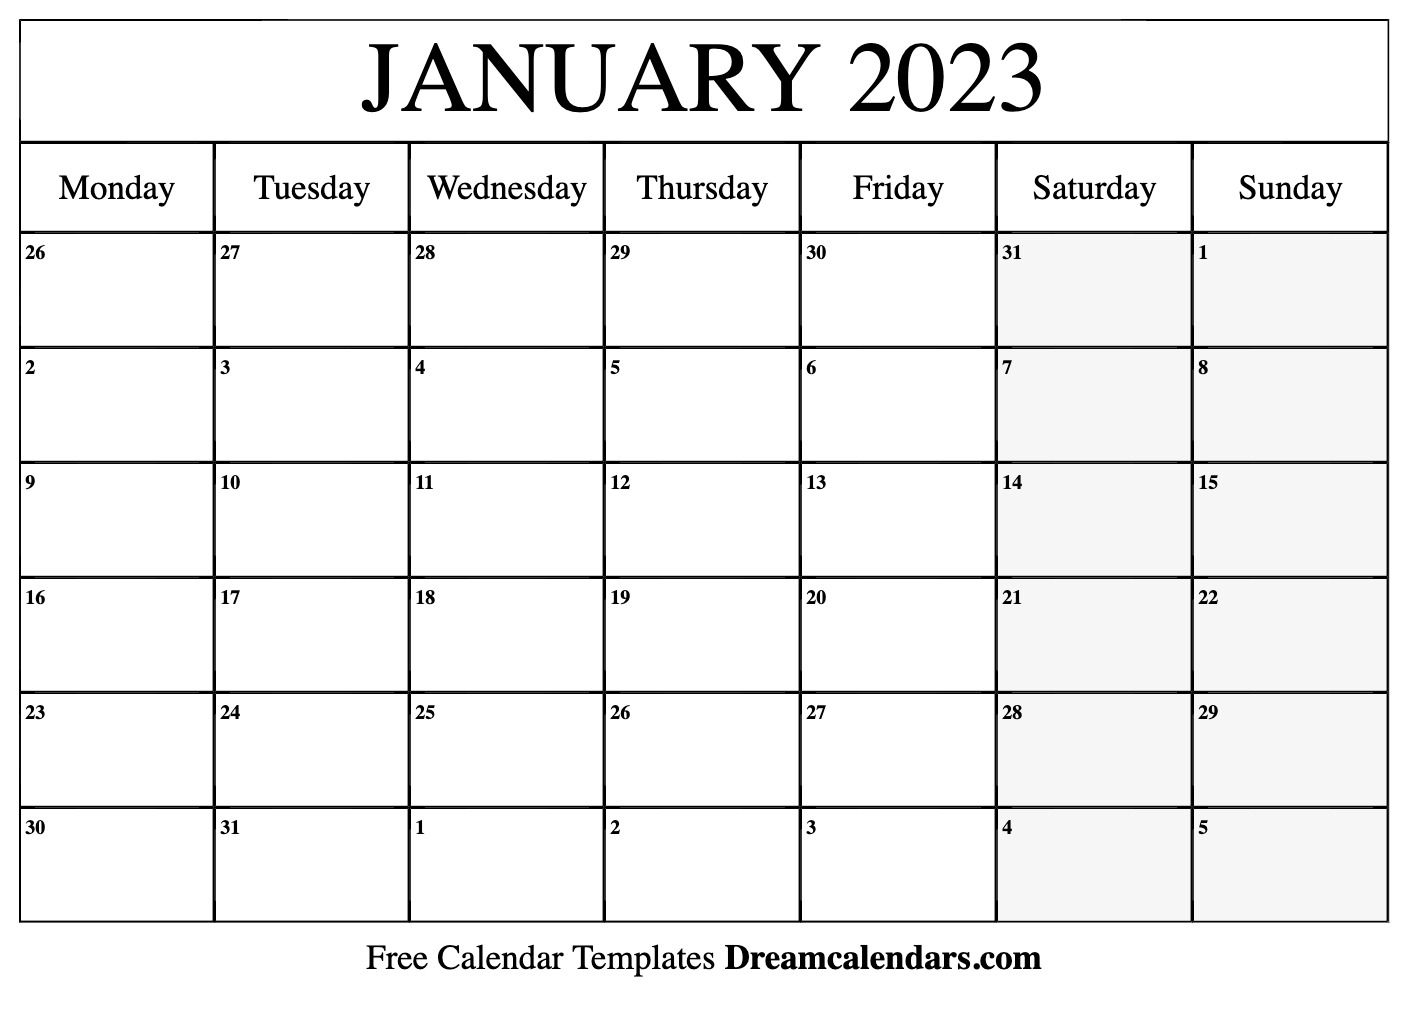 January 2023 Calendar Free Blank Printable With Holidays